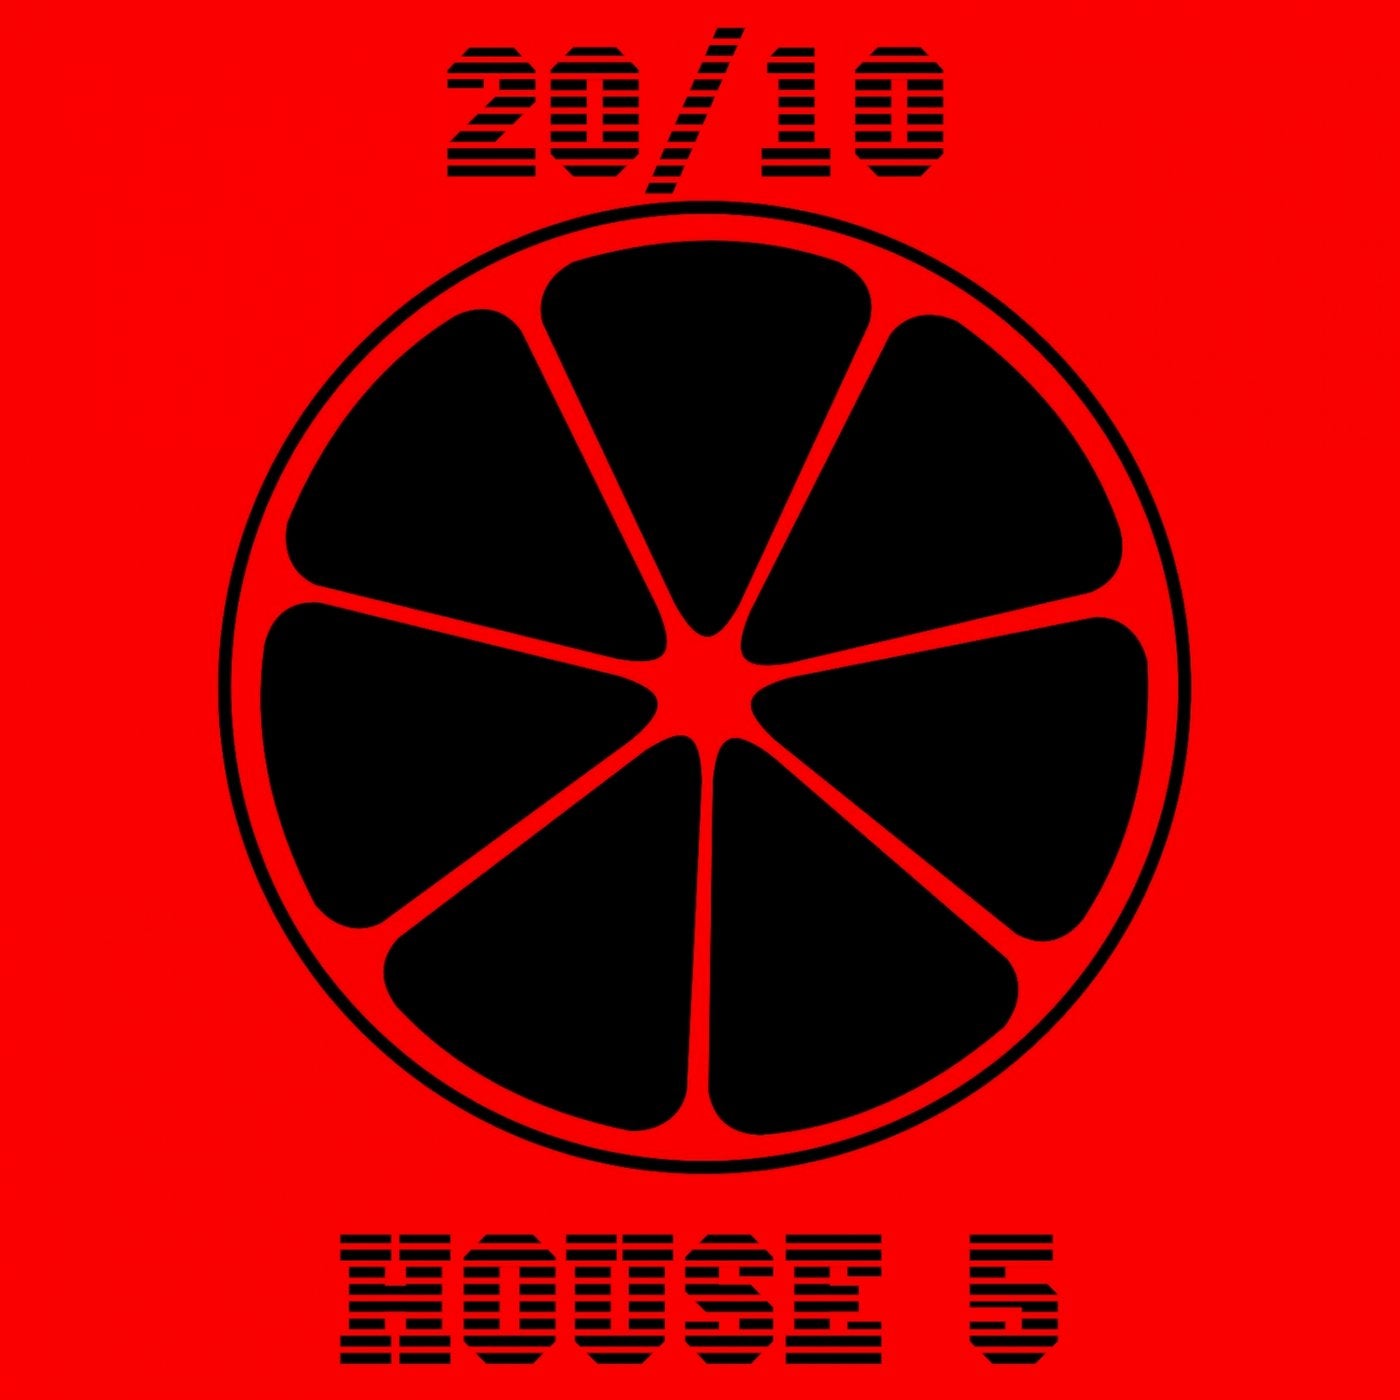 20/10 House, Vol. 5